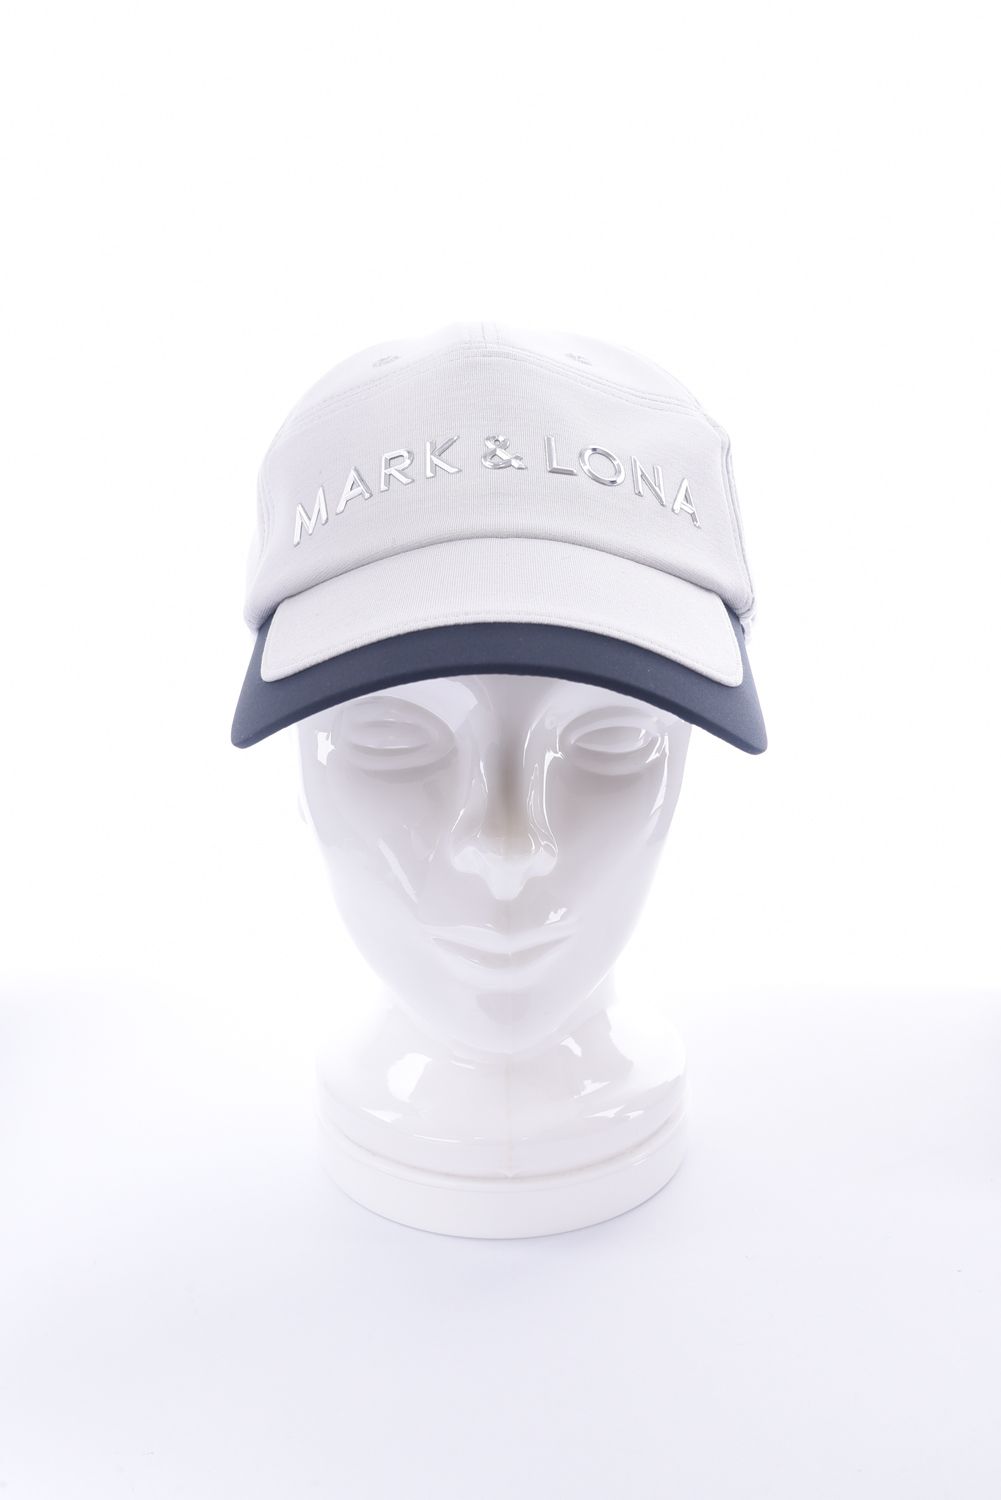 MARK&LONA - MERCURY JETTY CAP / 3Dメタリックロゴ バイカラー ベース 